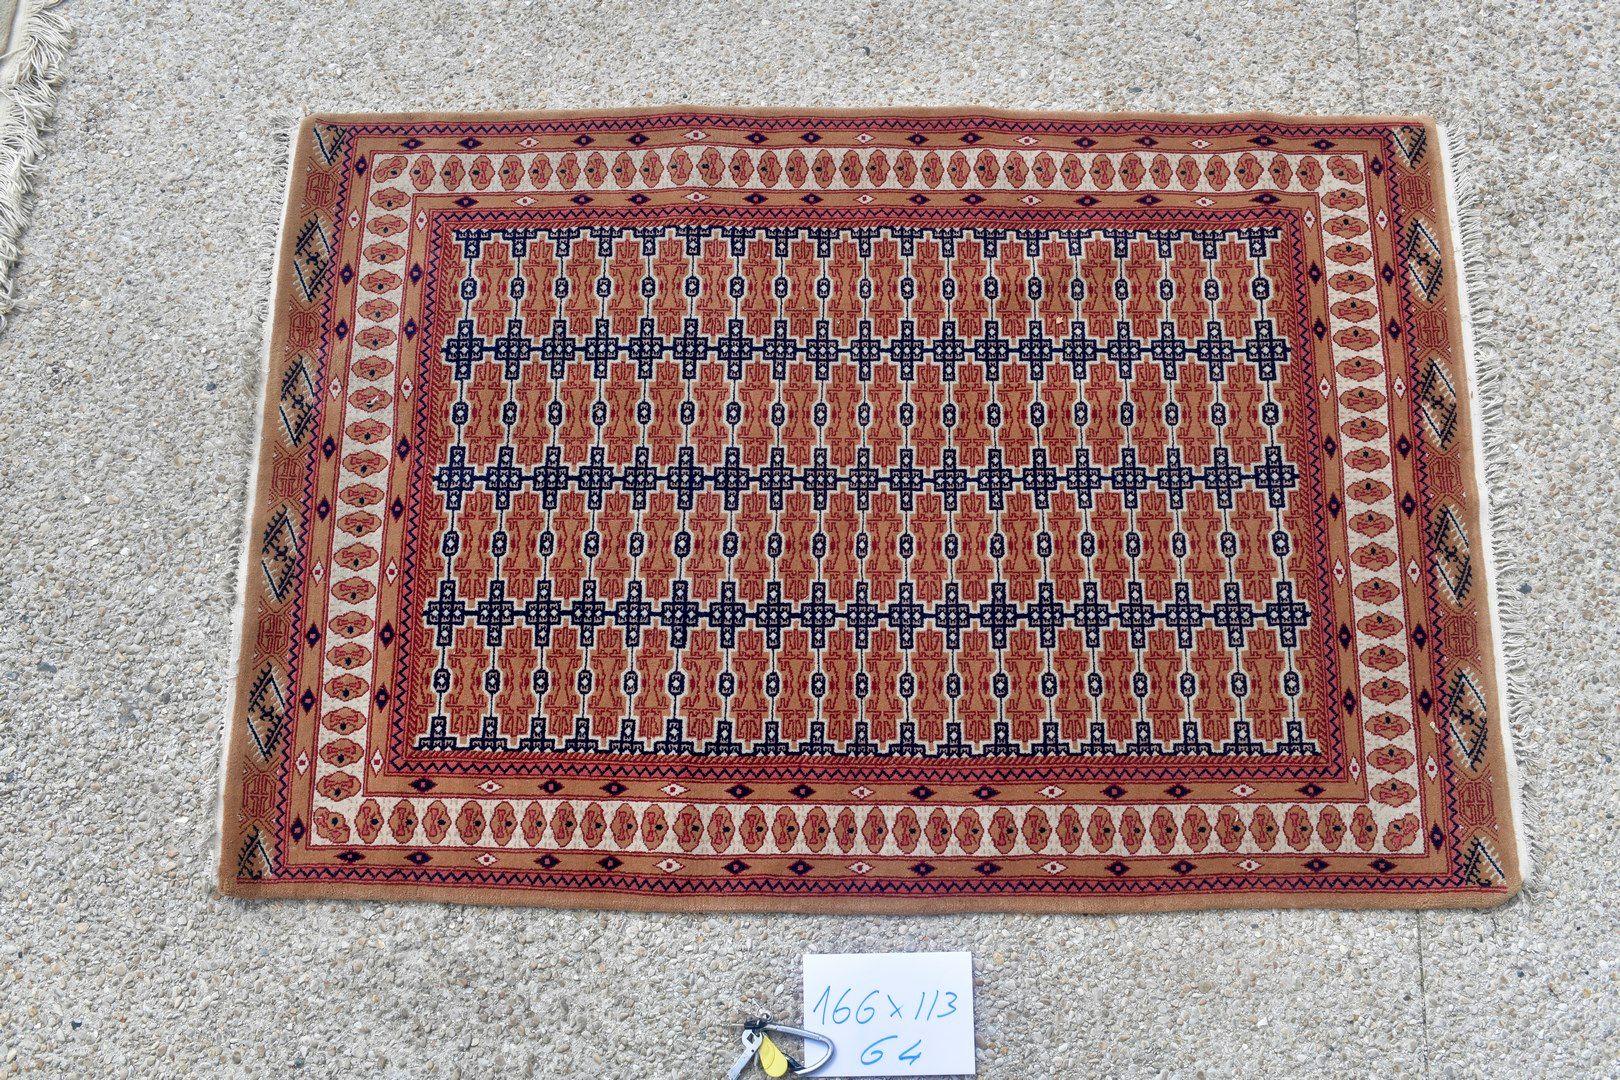 Null 印度-巴基斯坦，1980年。

羊毛天鹅绒，棉质衬底。

用烟草和象牙色装饰，让人联想到约姆德-布哈拉的地毯。

状况良好。

166x113厘米